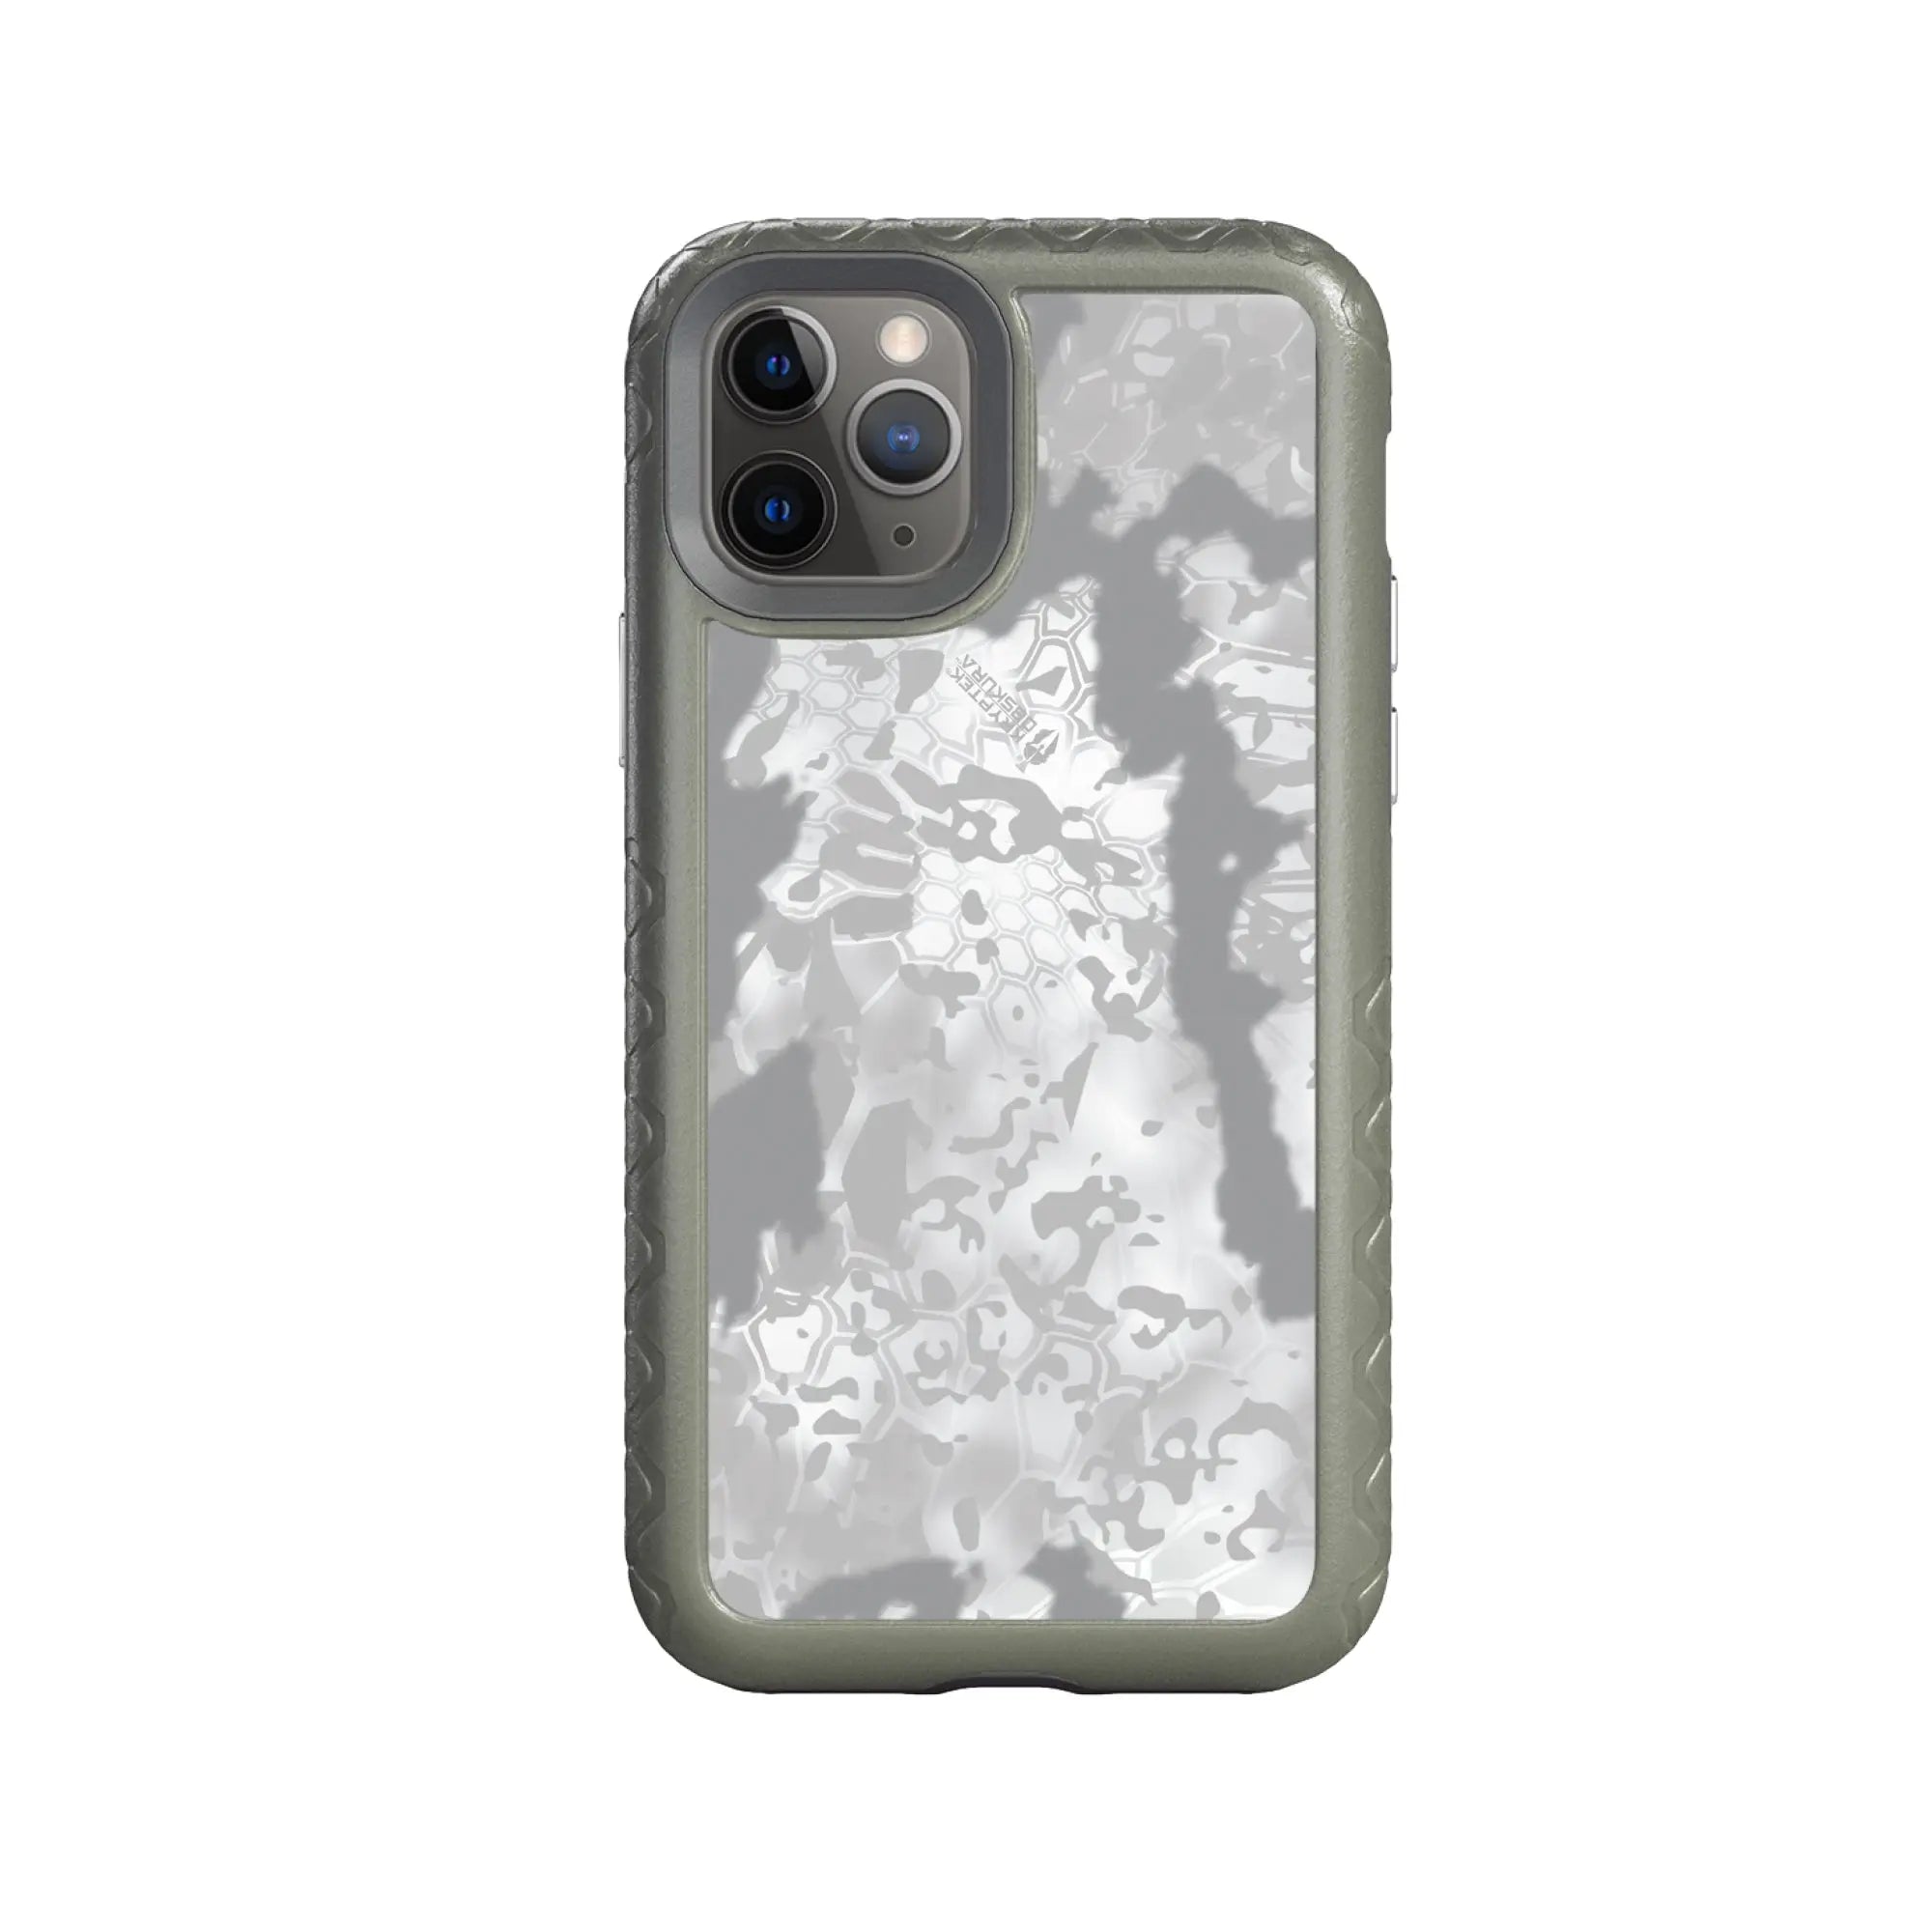 Kryptek Fortitude for Apple iPhone 11 Pro - Custom Case - OliveDrabGreenOBSKURANIVIS - cellhelmet